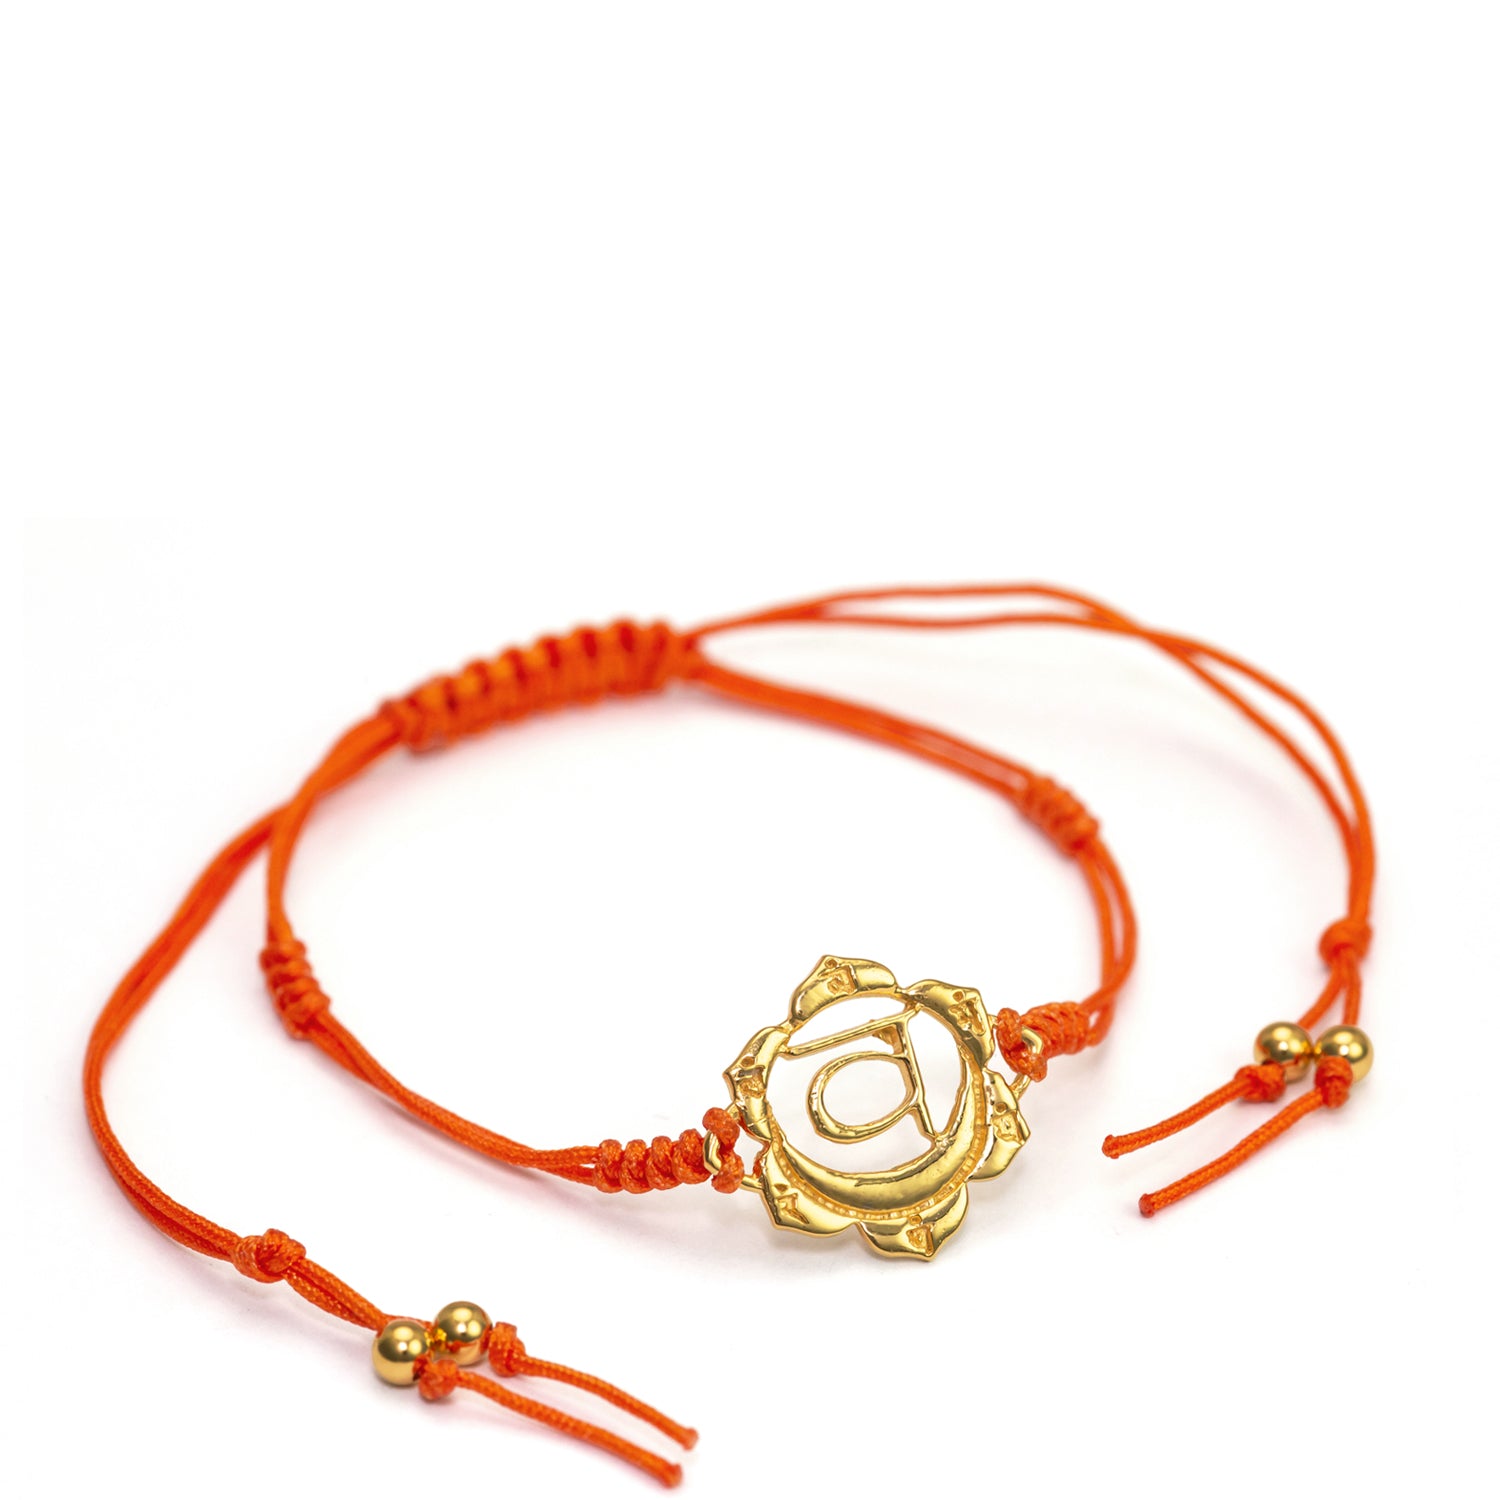 Svadhisthana Chakra Armband vergoldet von ETERNAL BLISS - Spiritueller Schmuck